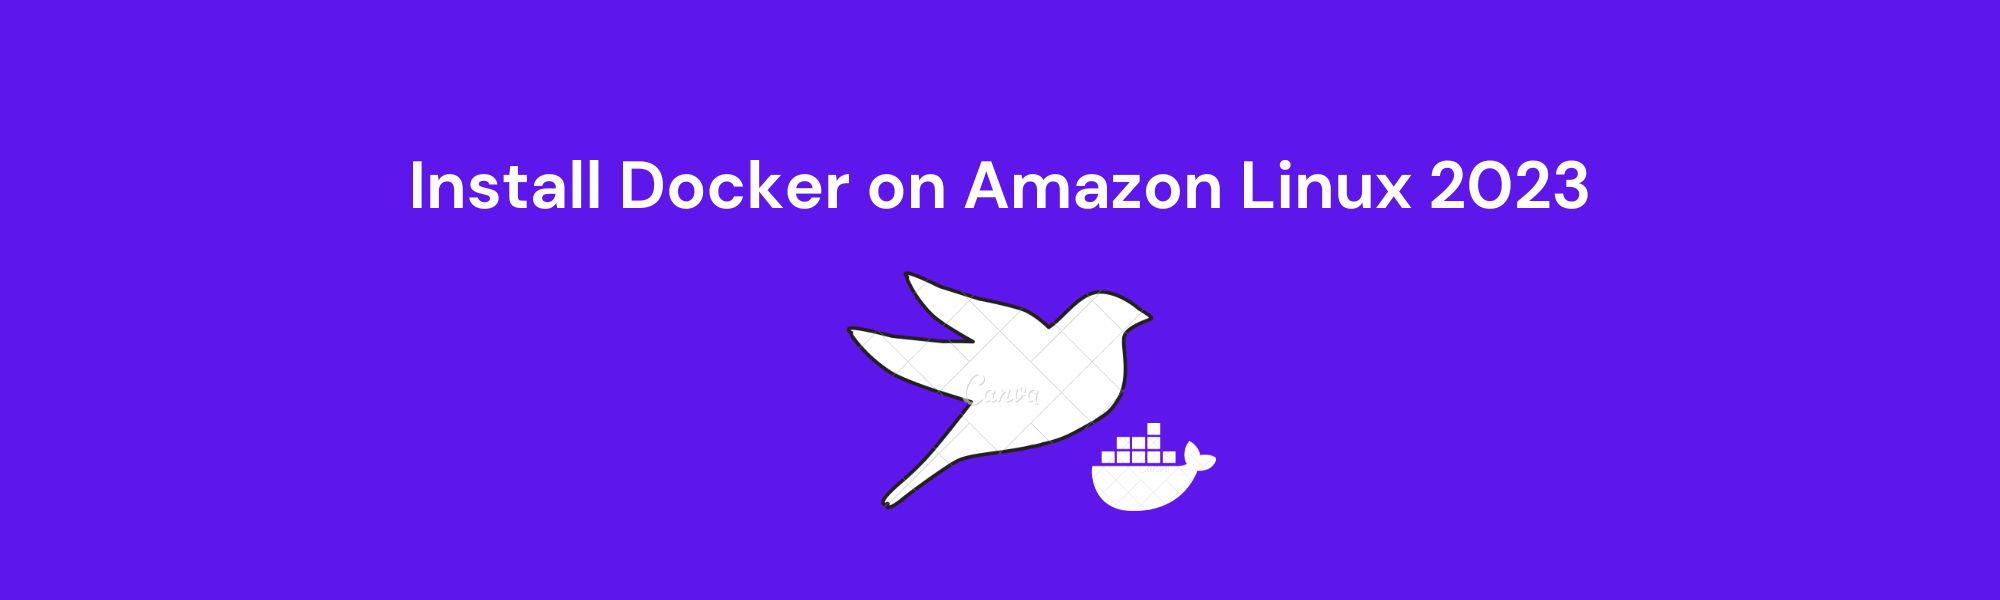 Install Docker on Amazon Linux 2023